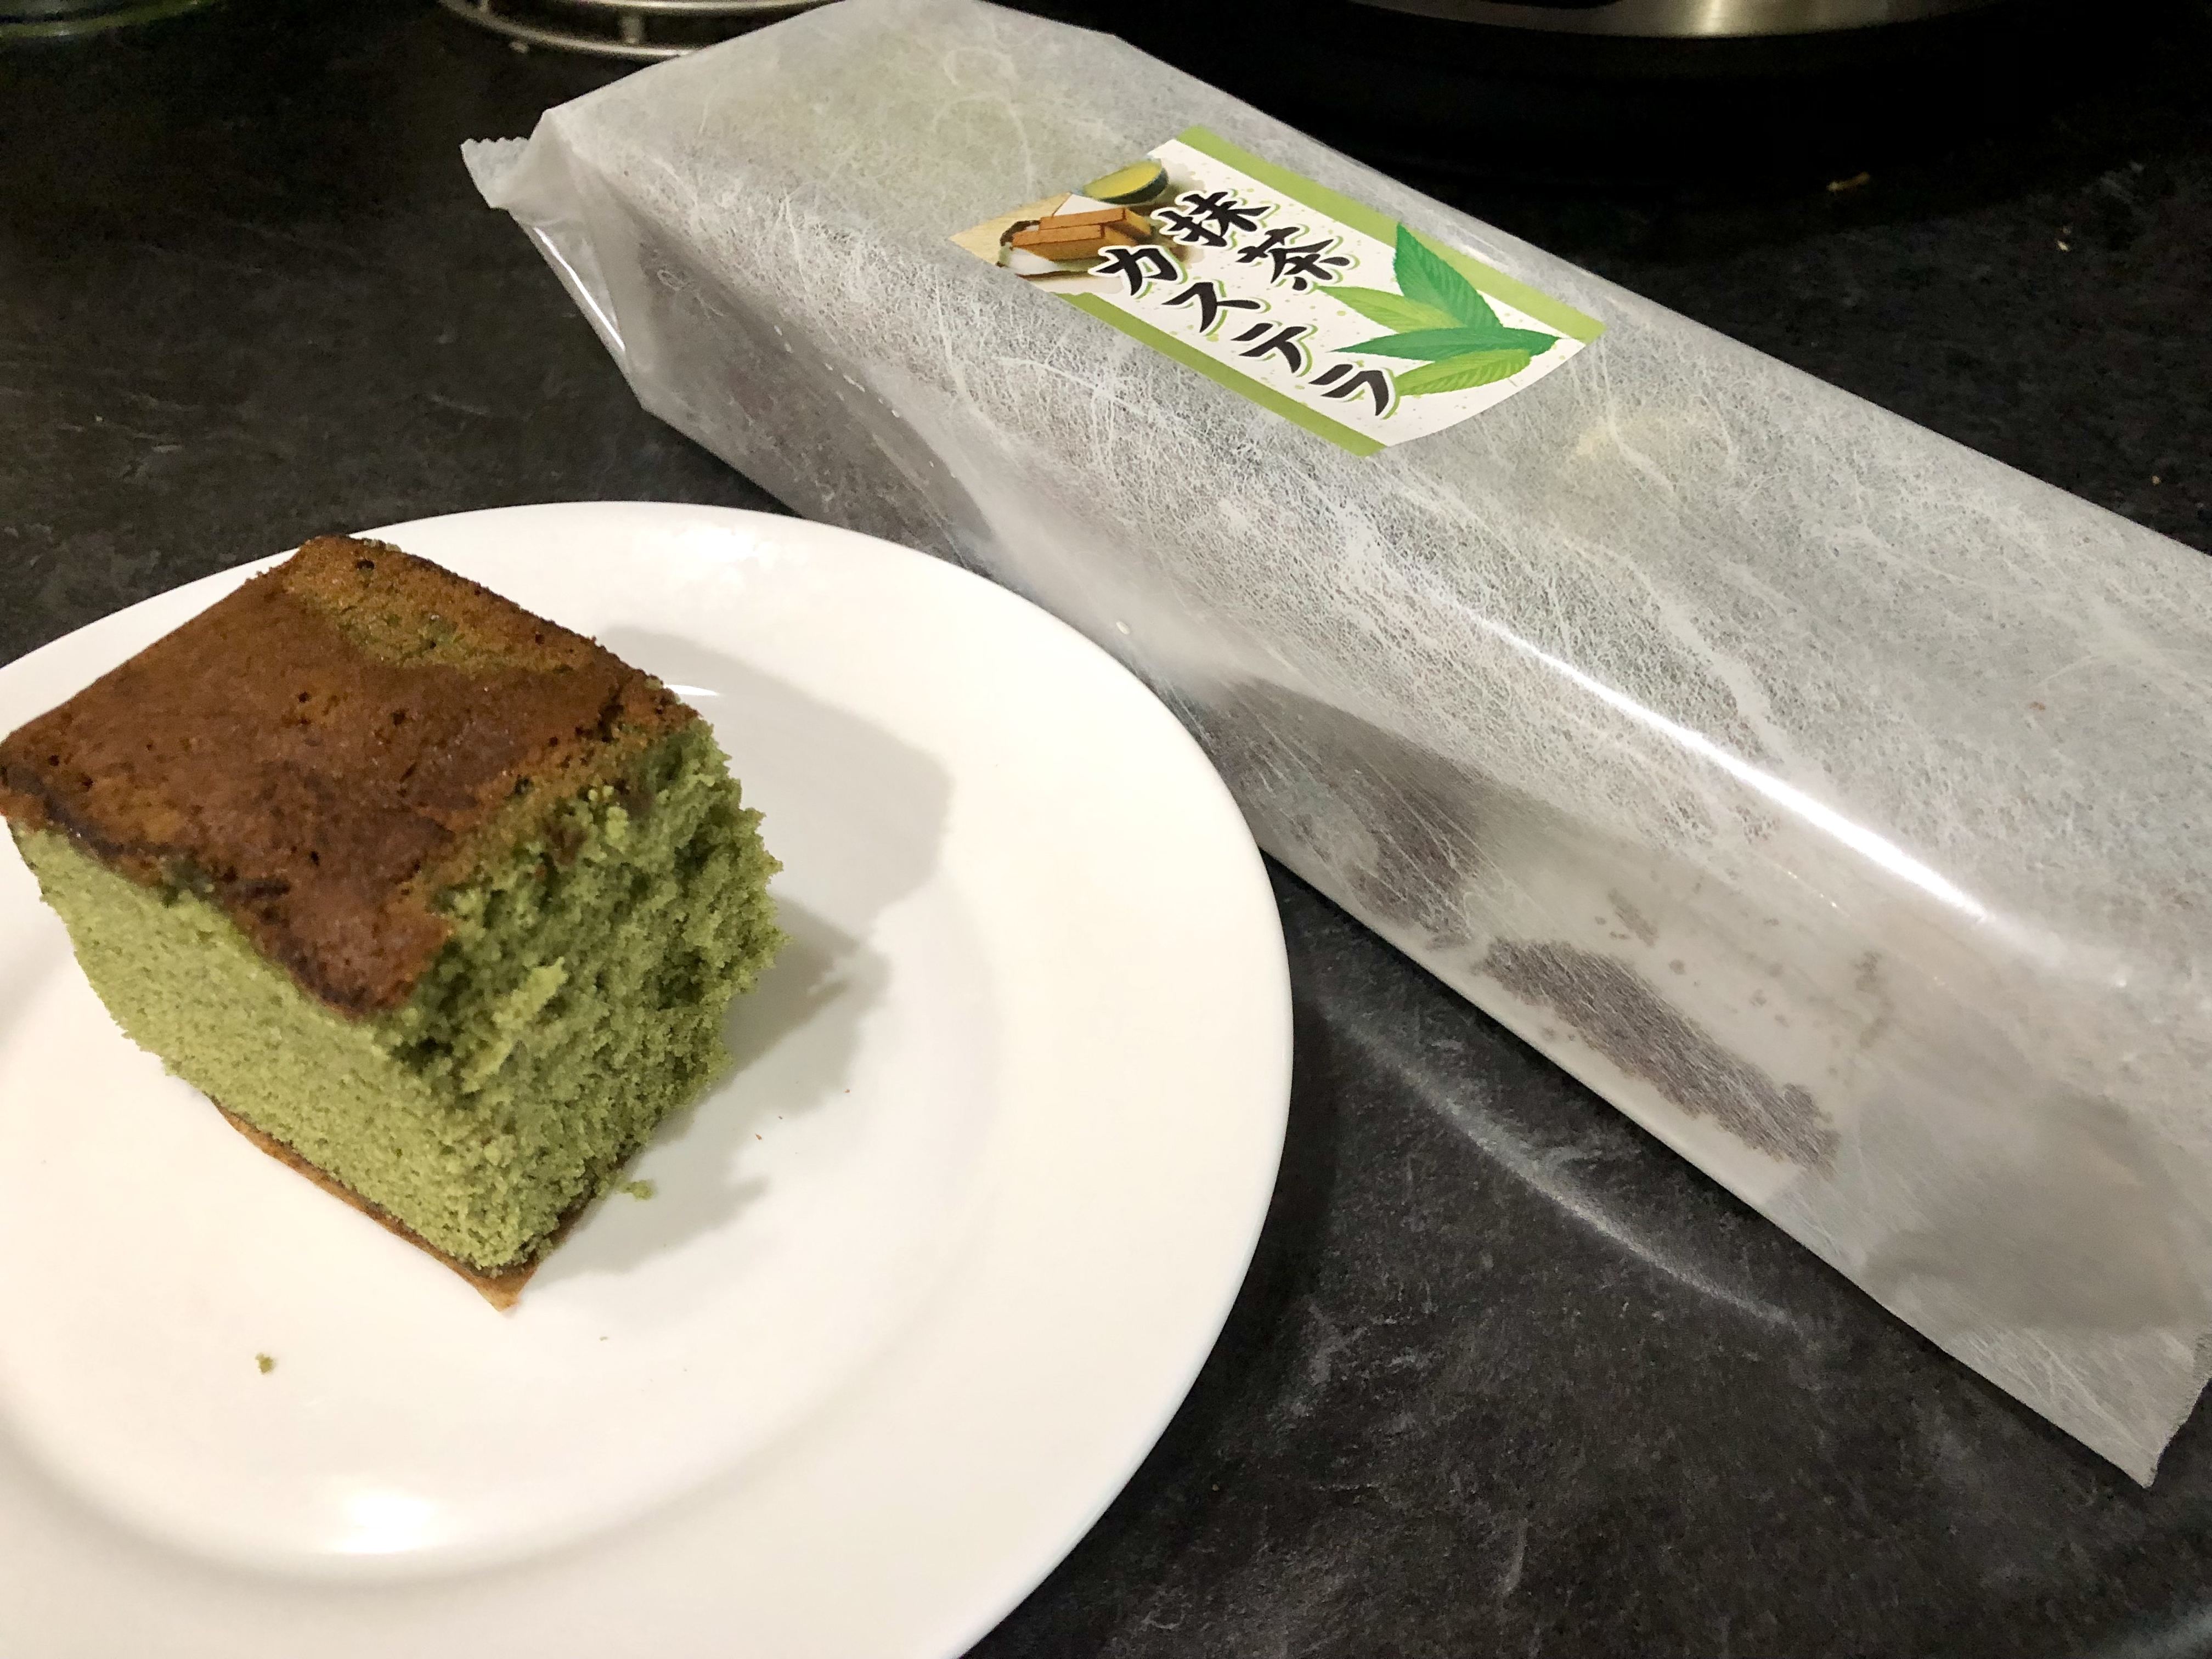 On a white plae, there is a slice of Karaku green tea cake. Photo by Xiaohui Zhang.